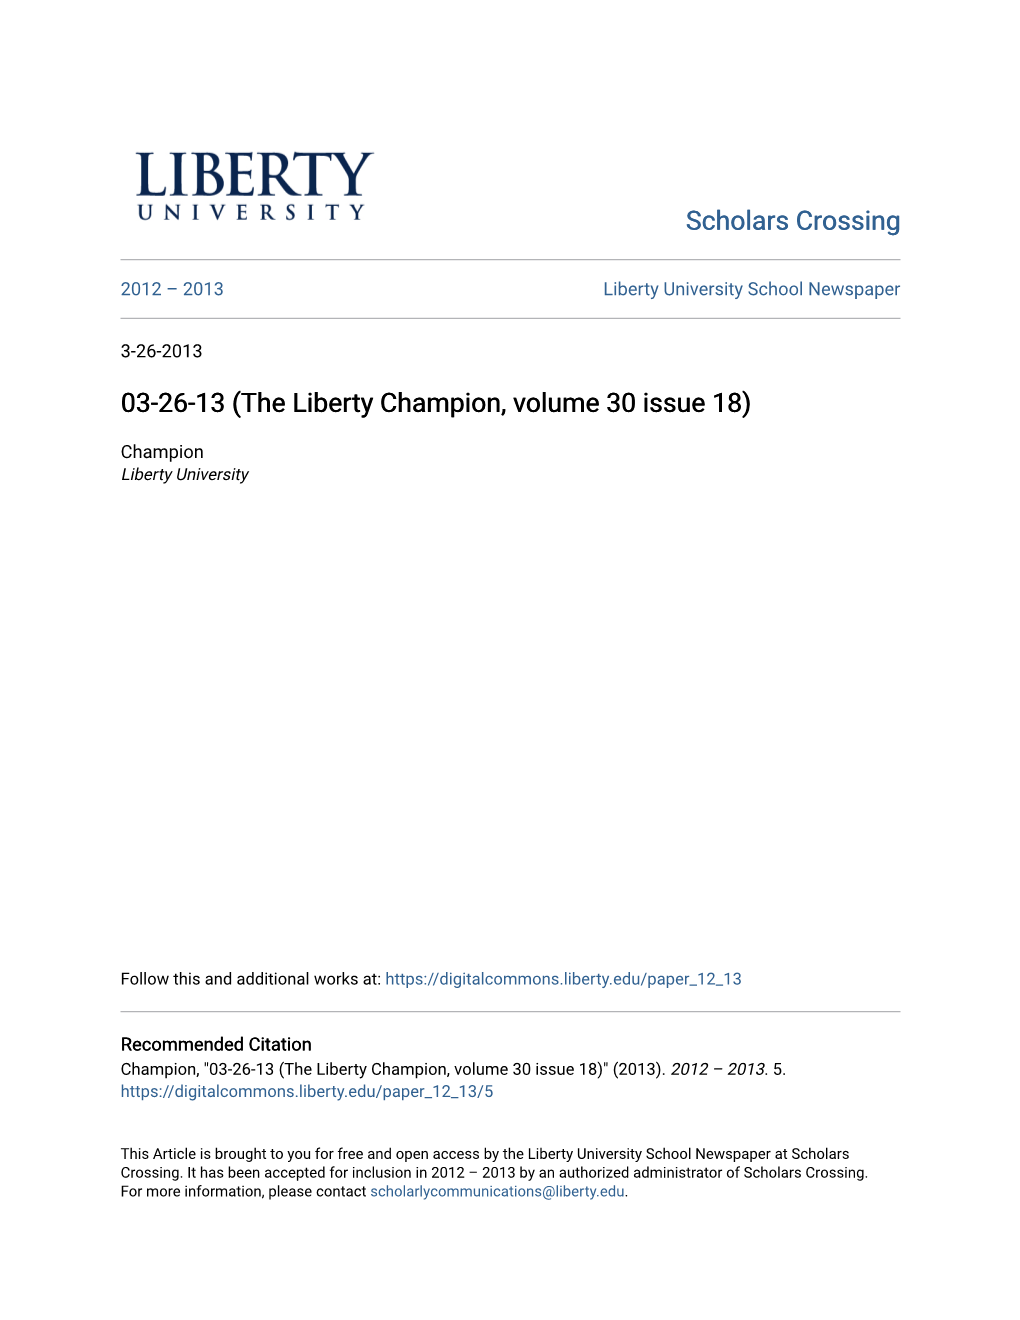 03-26-13 (The Liberty Champion, Volume 30 Issue 18)